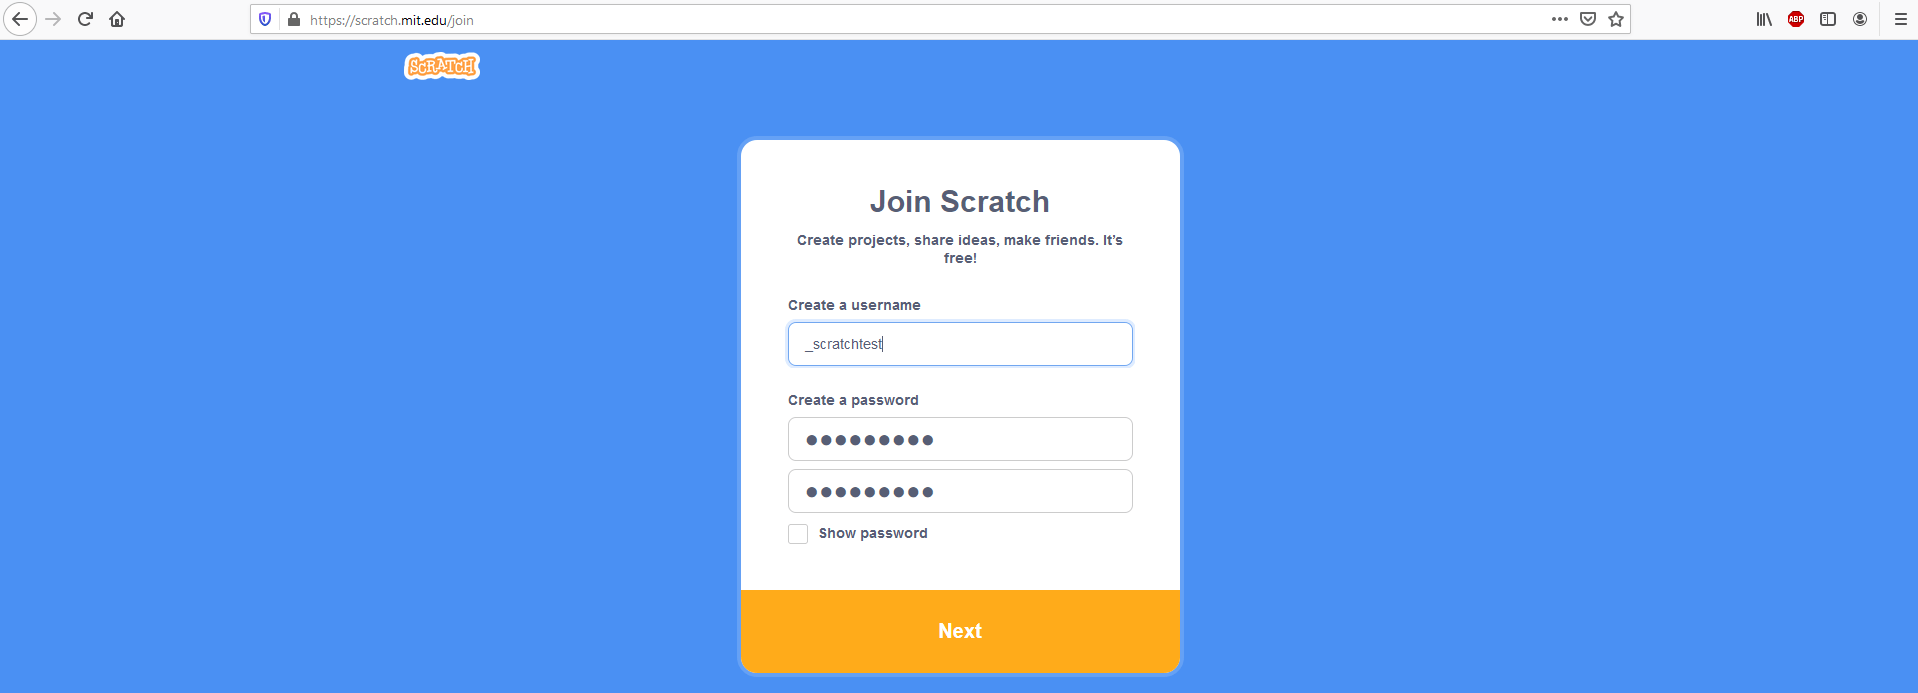 “Unisciti alla community di Scratch”: finestra per la creazione di un account utente Scratch